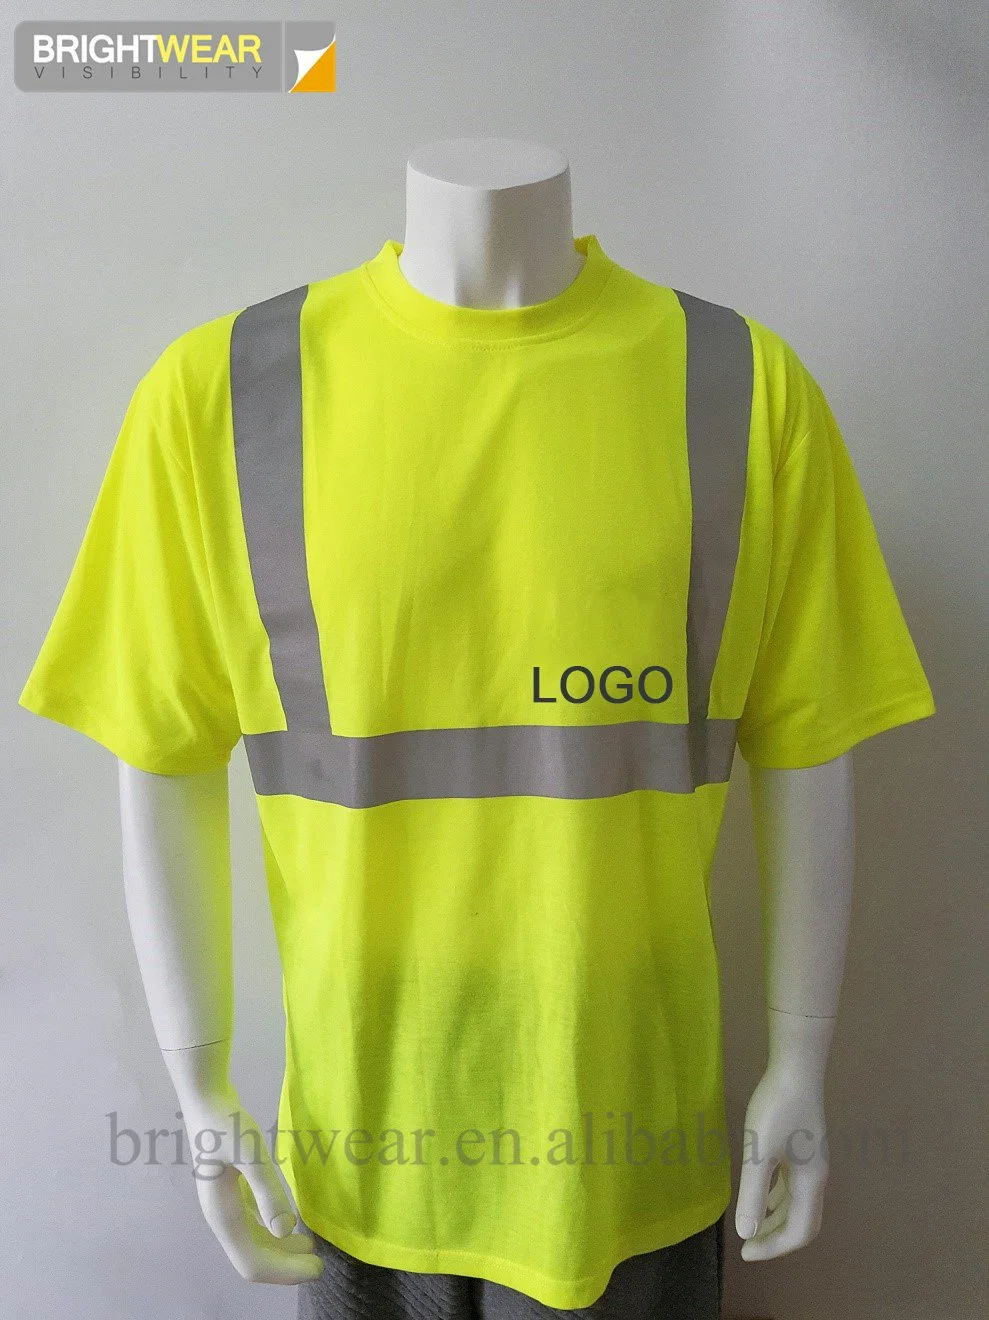 ANSI Safety T-Shirt Reflective Safety Clothing Workwear PPE Garment